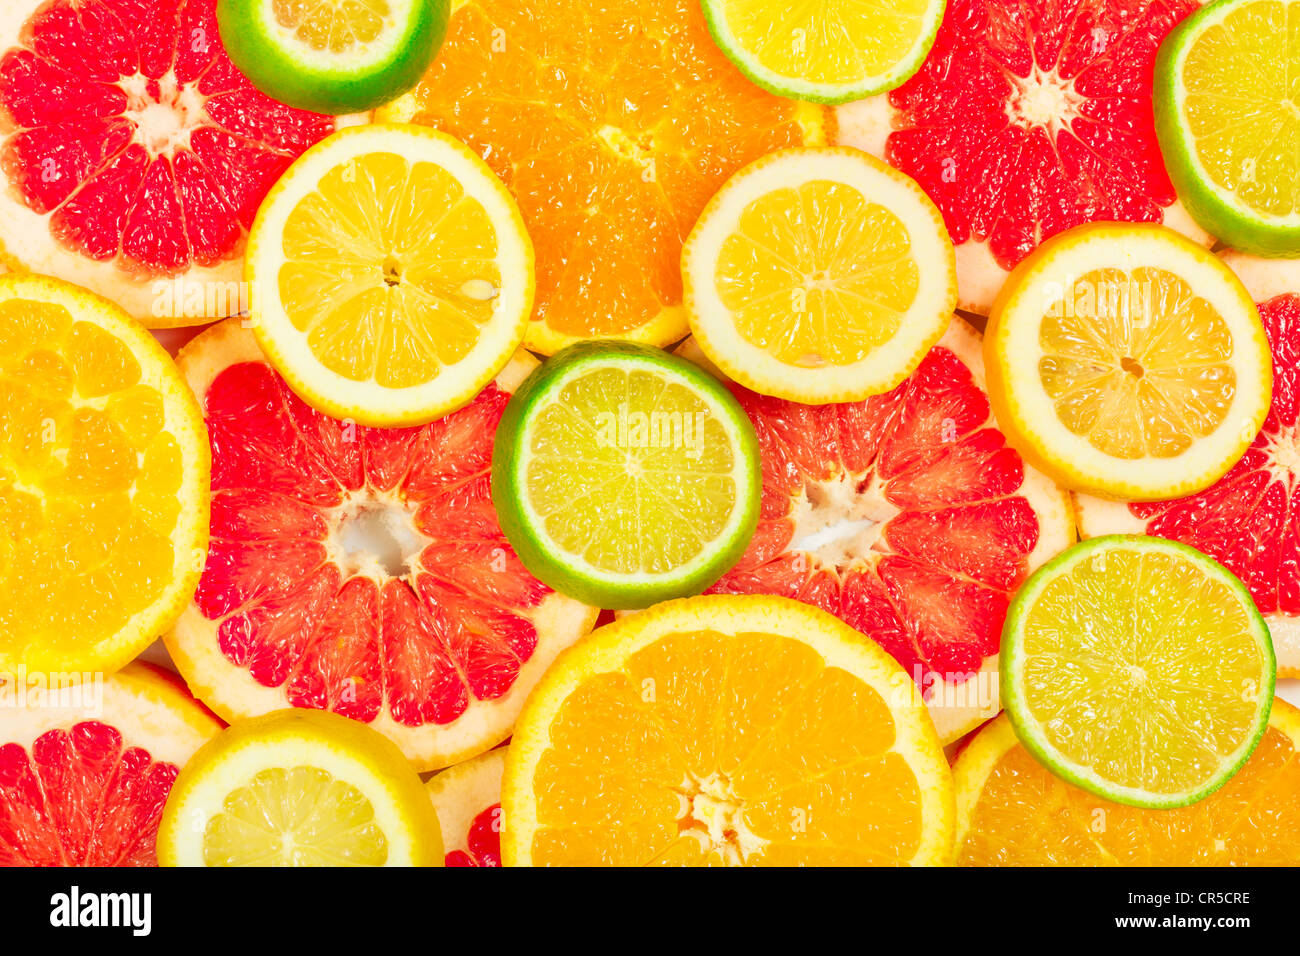 Mixed citrus fruit as background Stock Photo